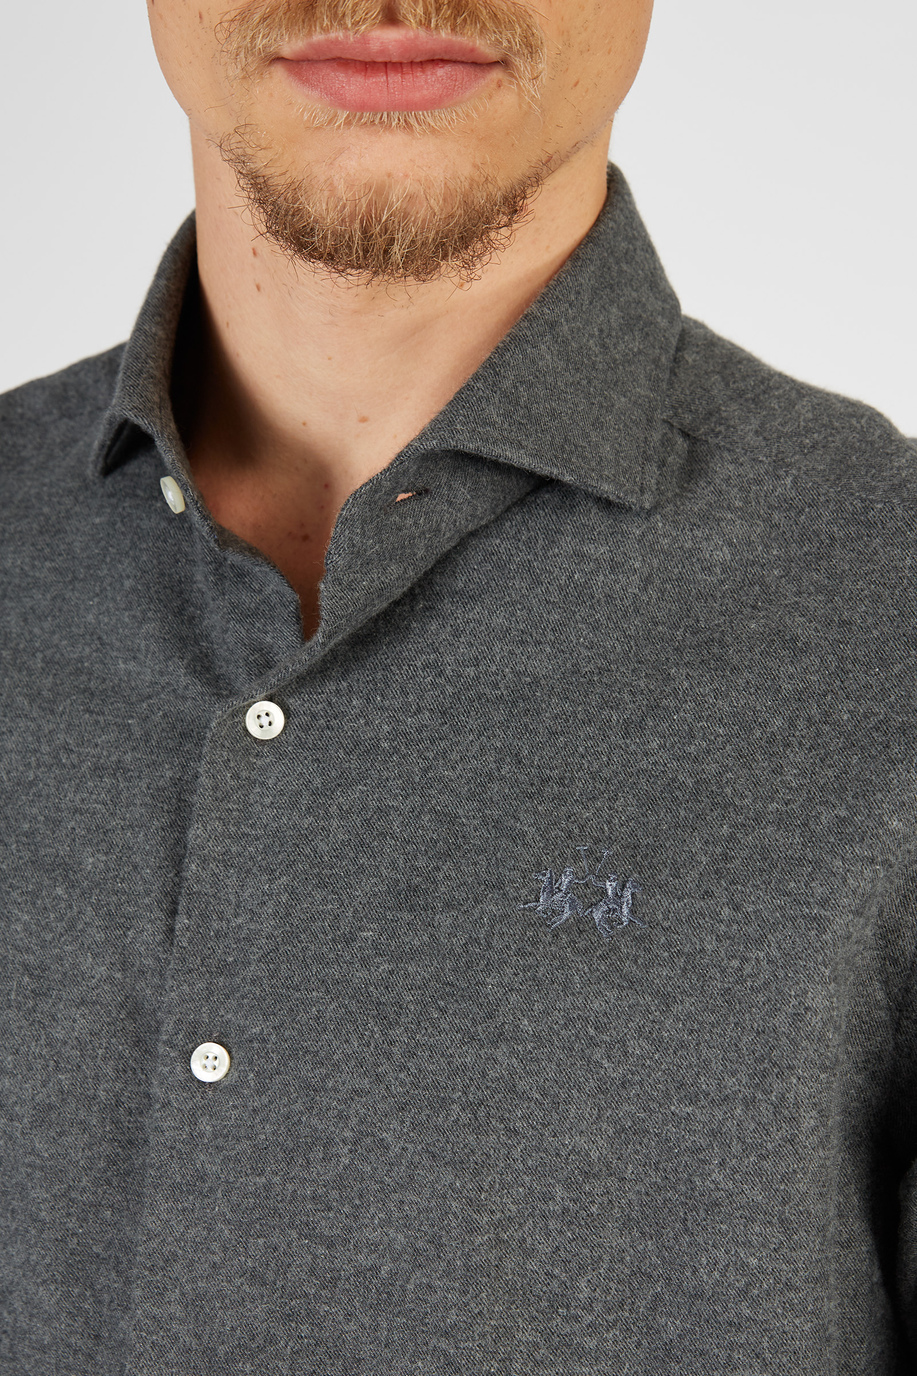 Blue Ribbon Herrenhemd mit langen Ärmeln aus Flanell Comfort Fit - Premium Fabrics | La Martina - Official Online Shop